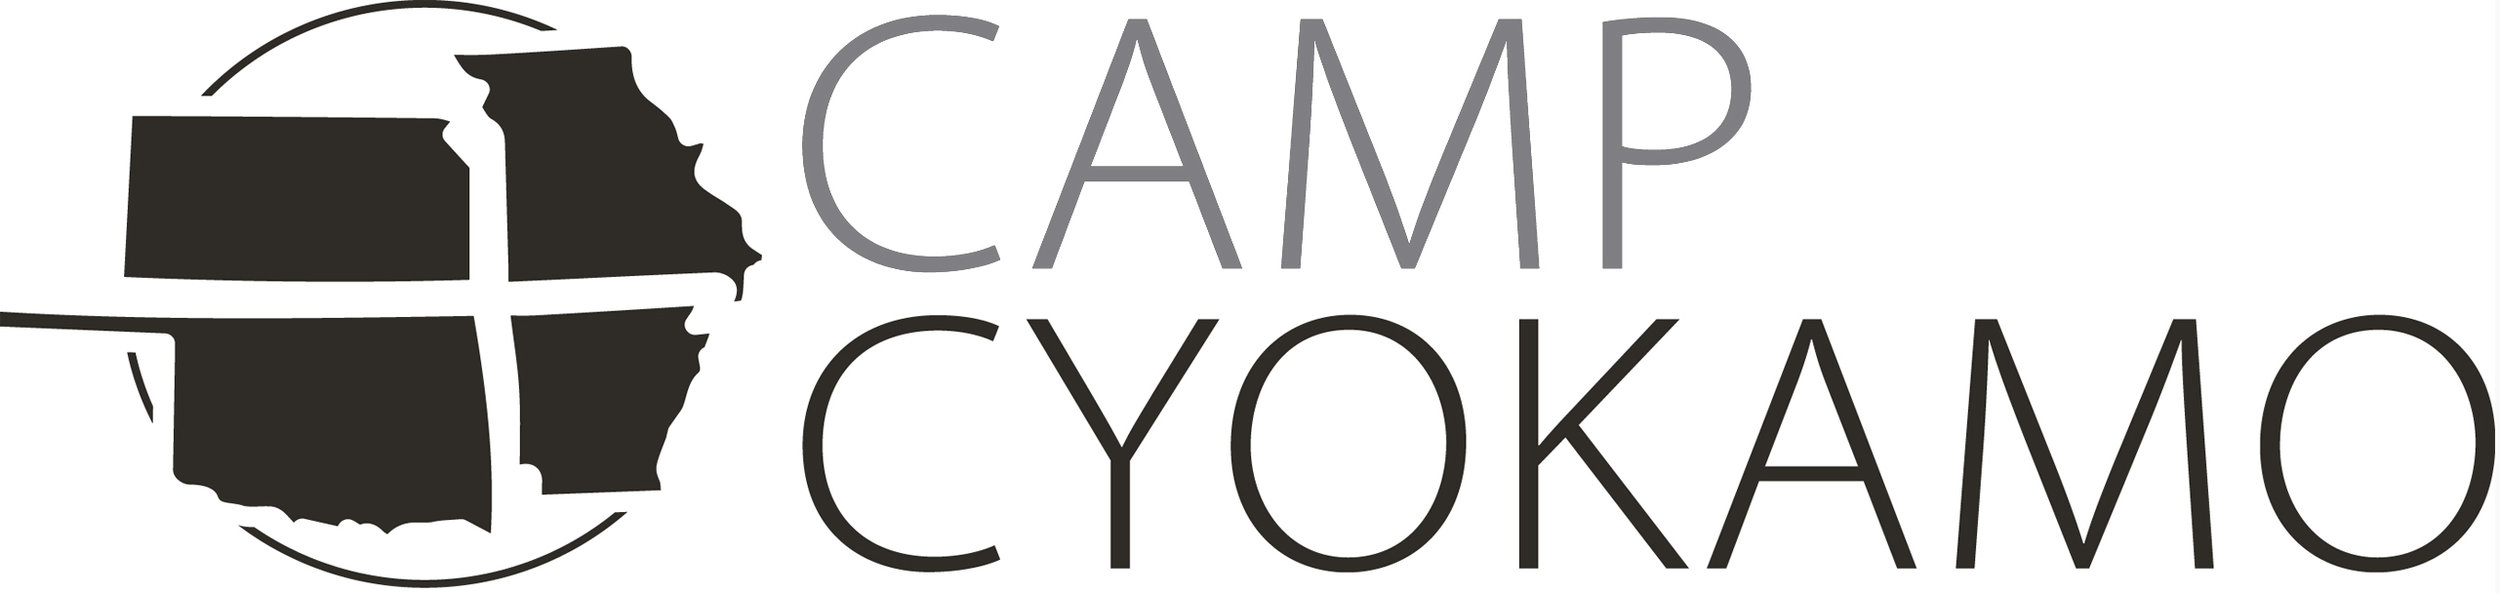 Camp Cyokamo Stacked (gray).jpg